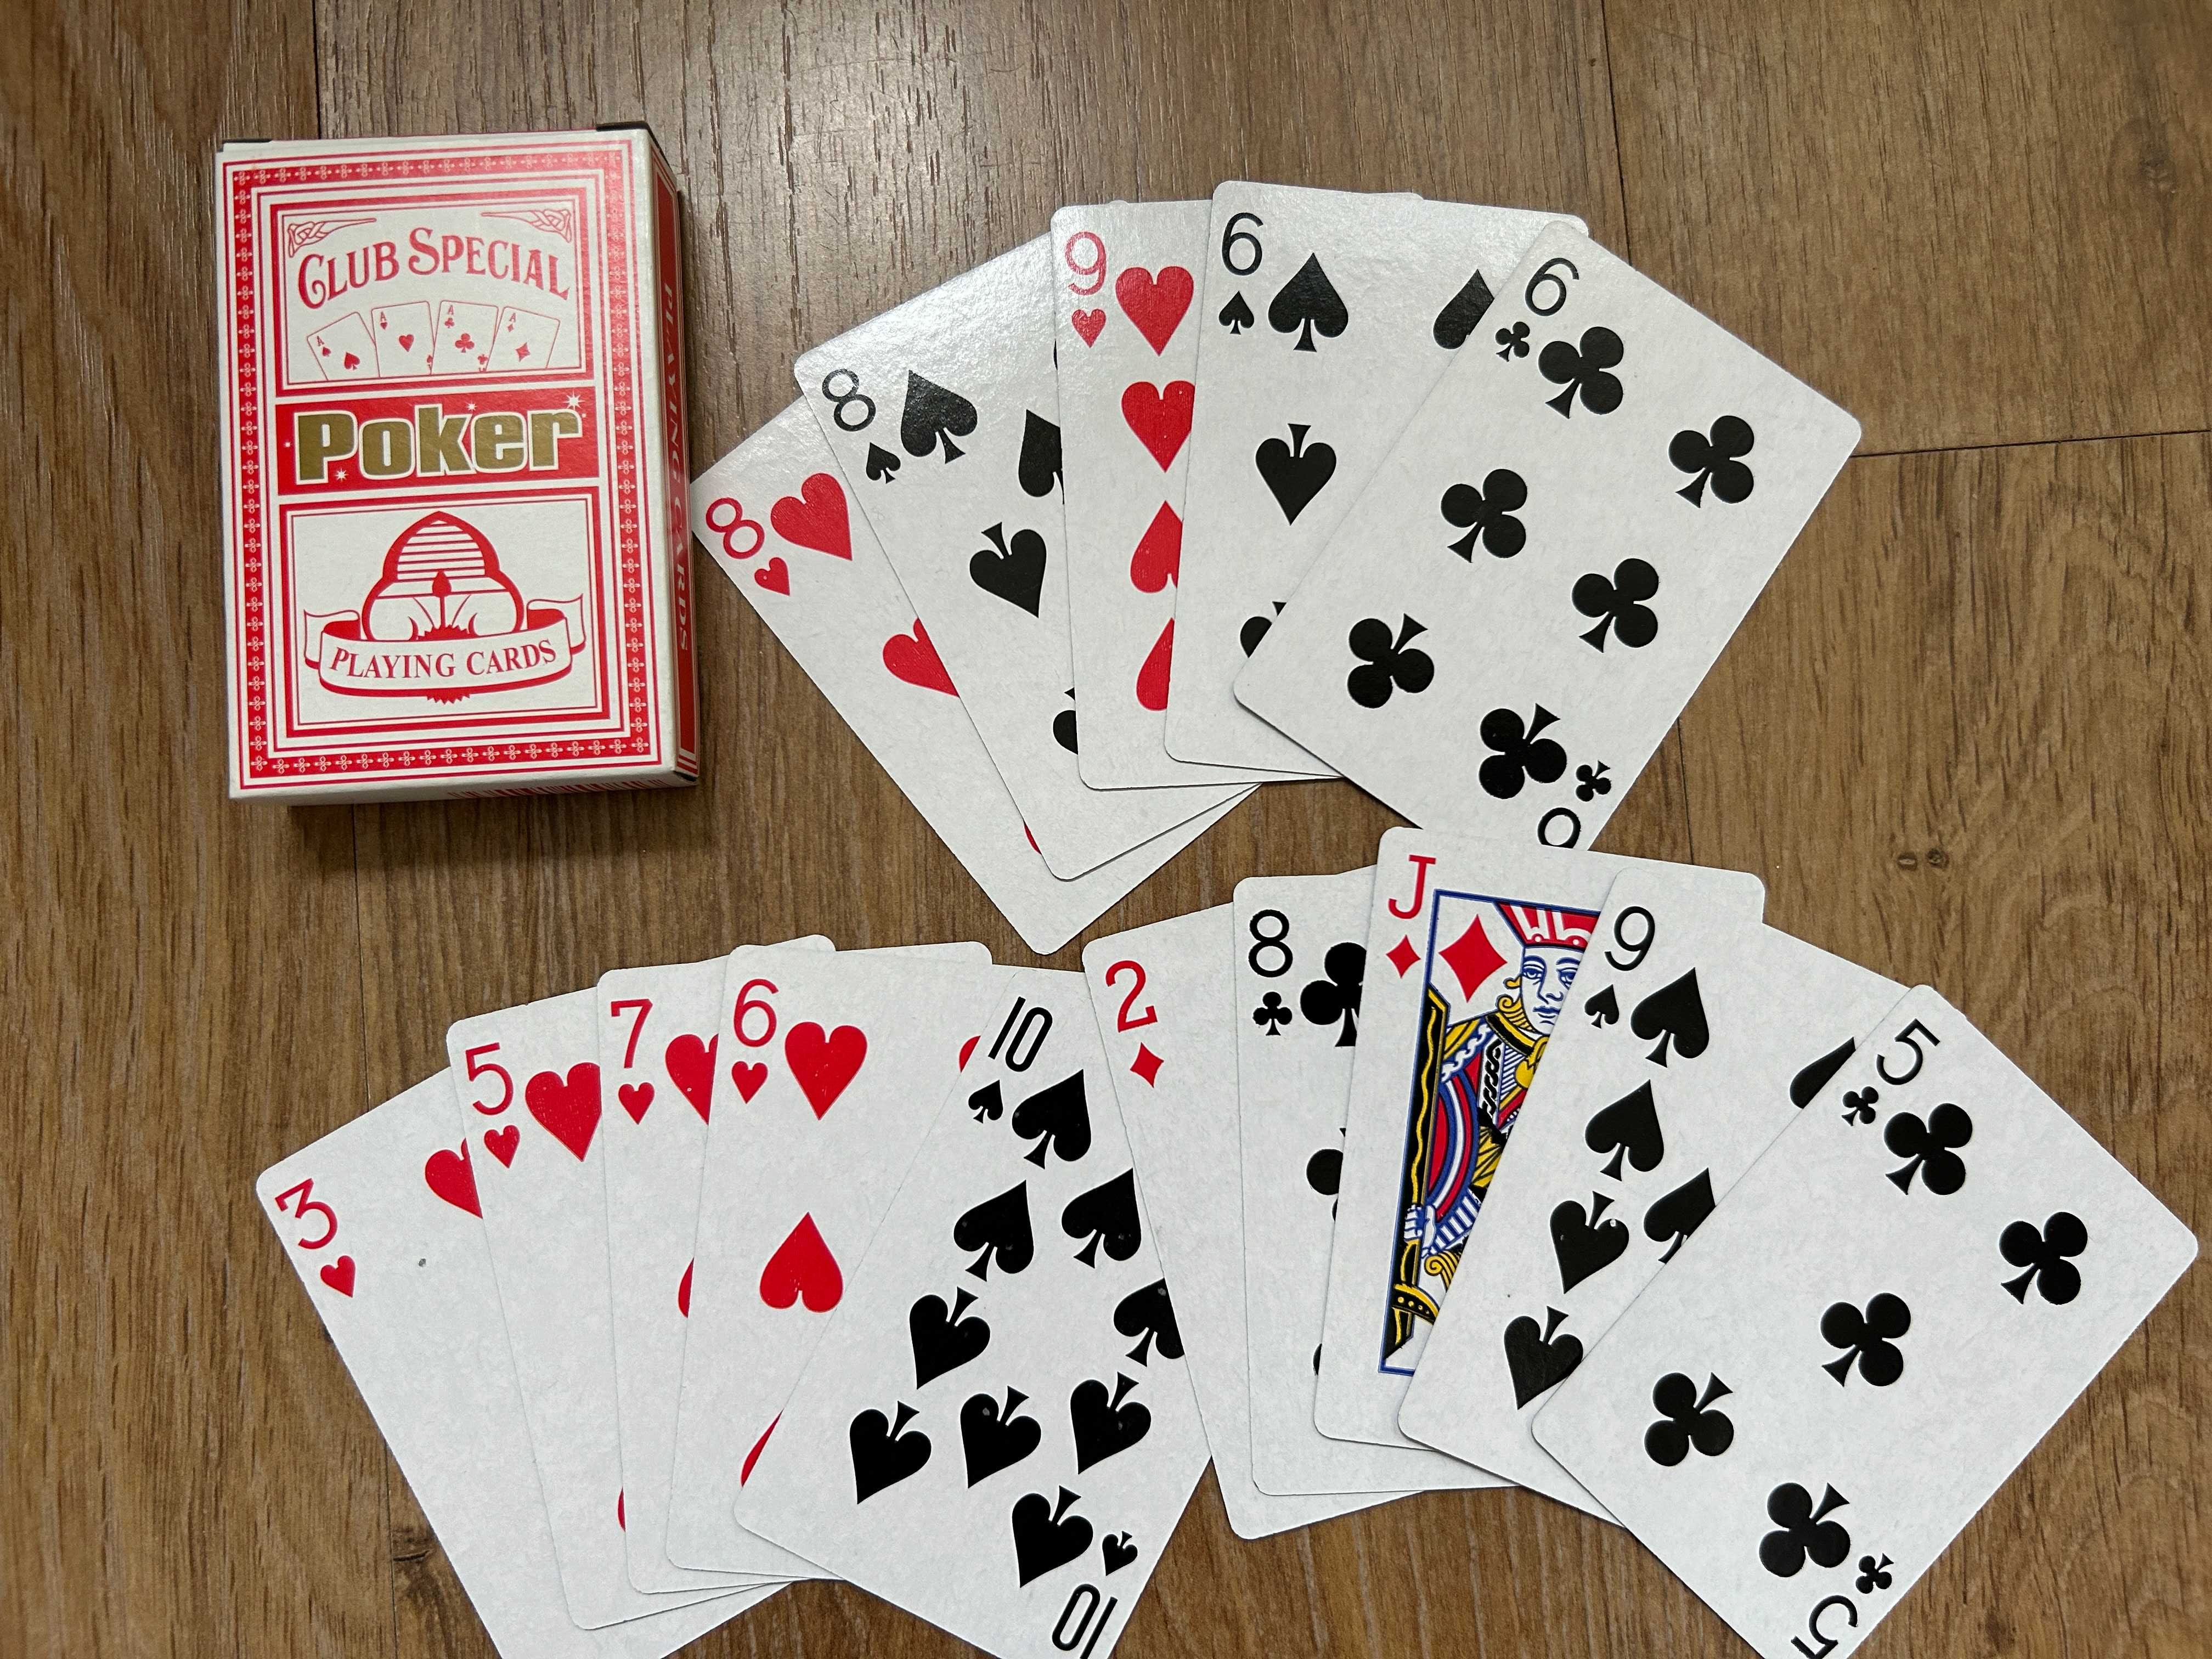 Гральні карти для покера Club Special Poker Playing Cards